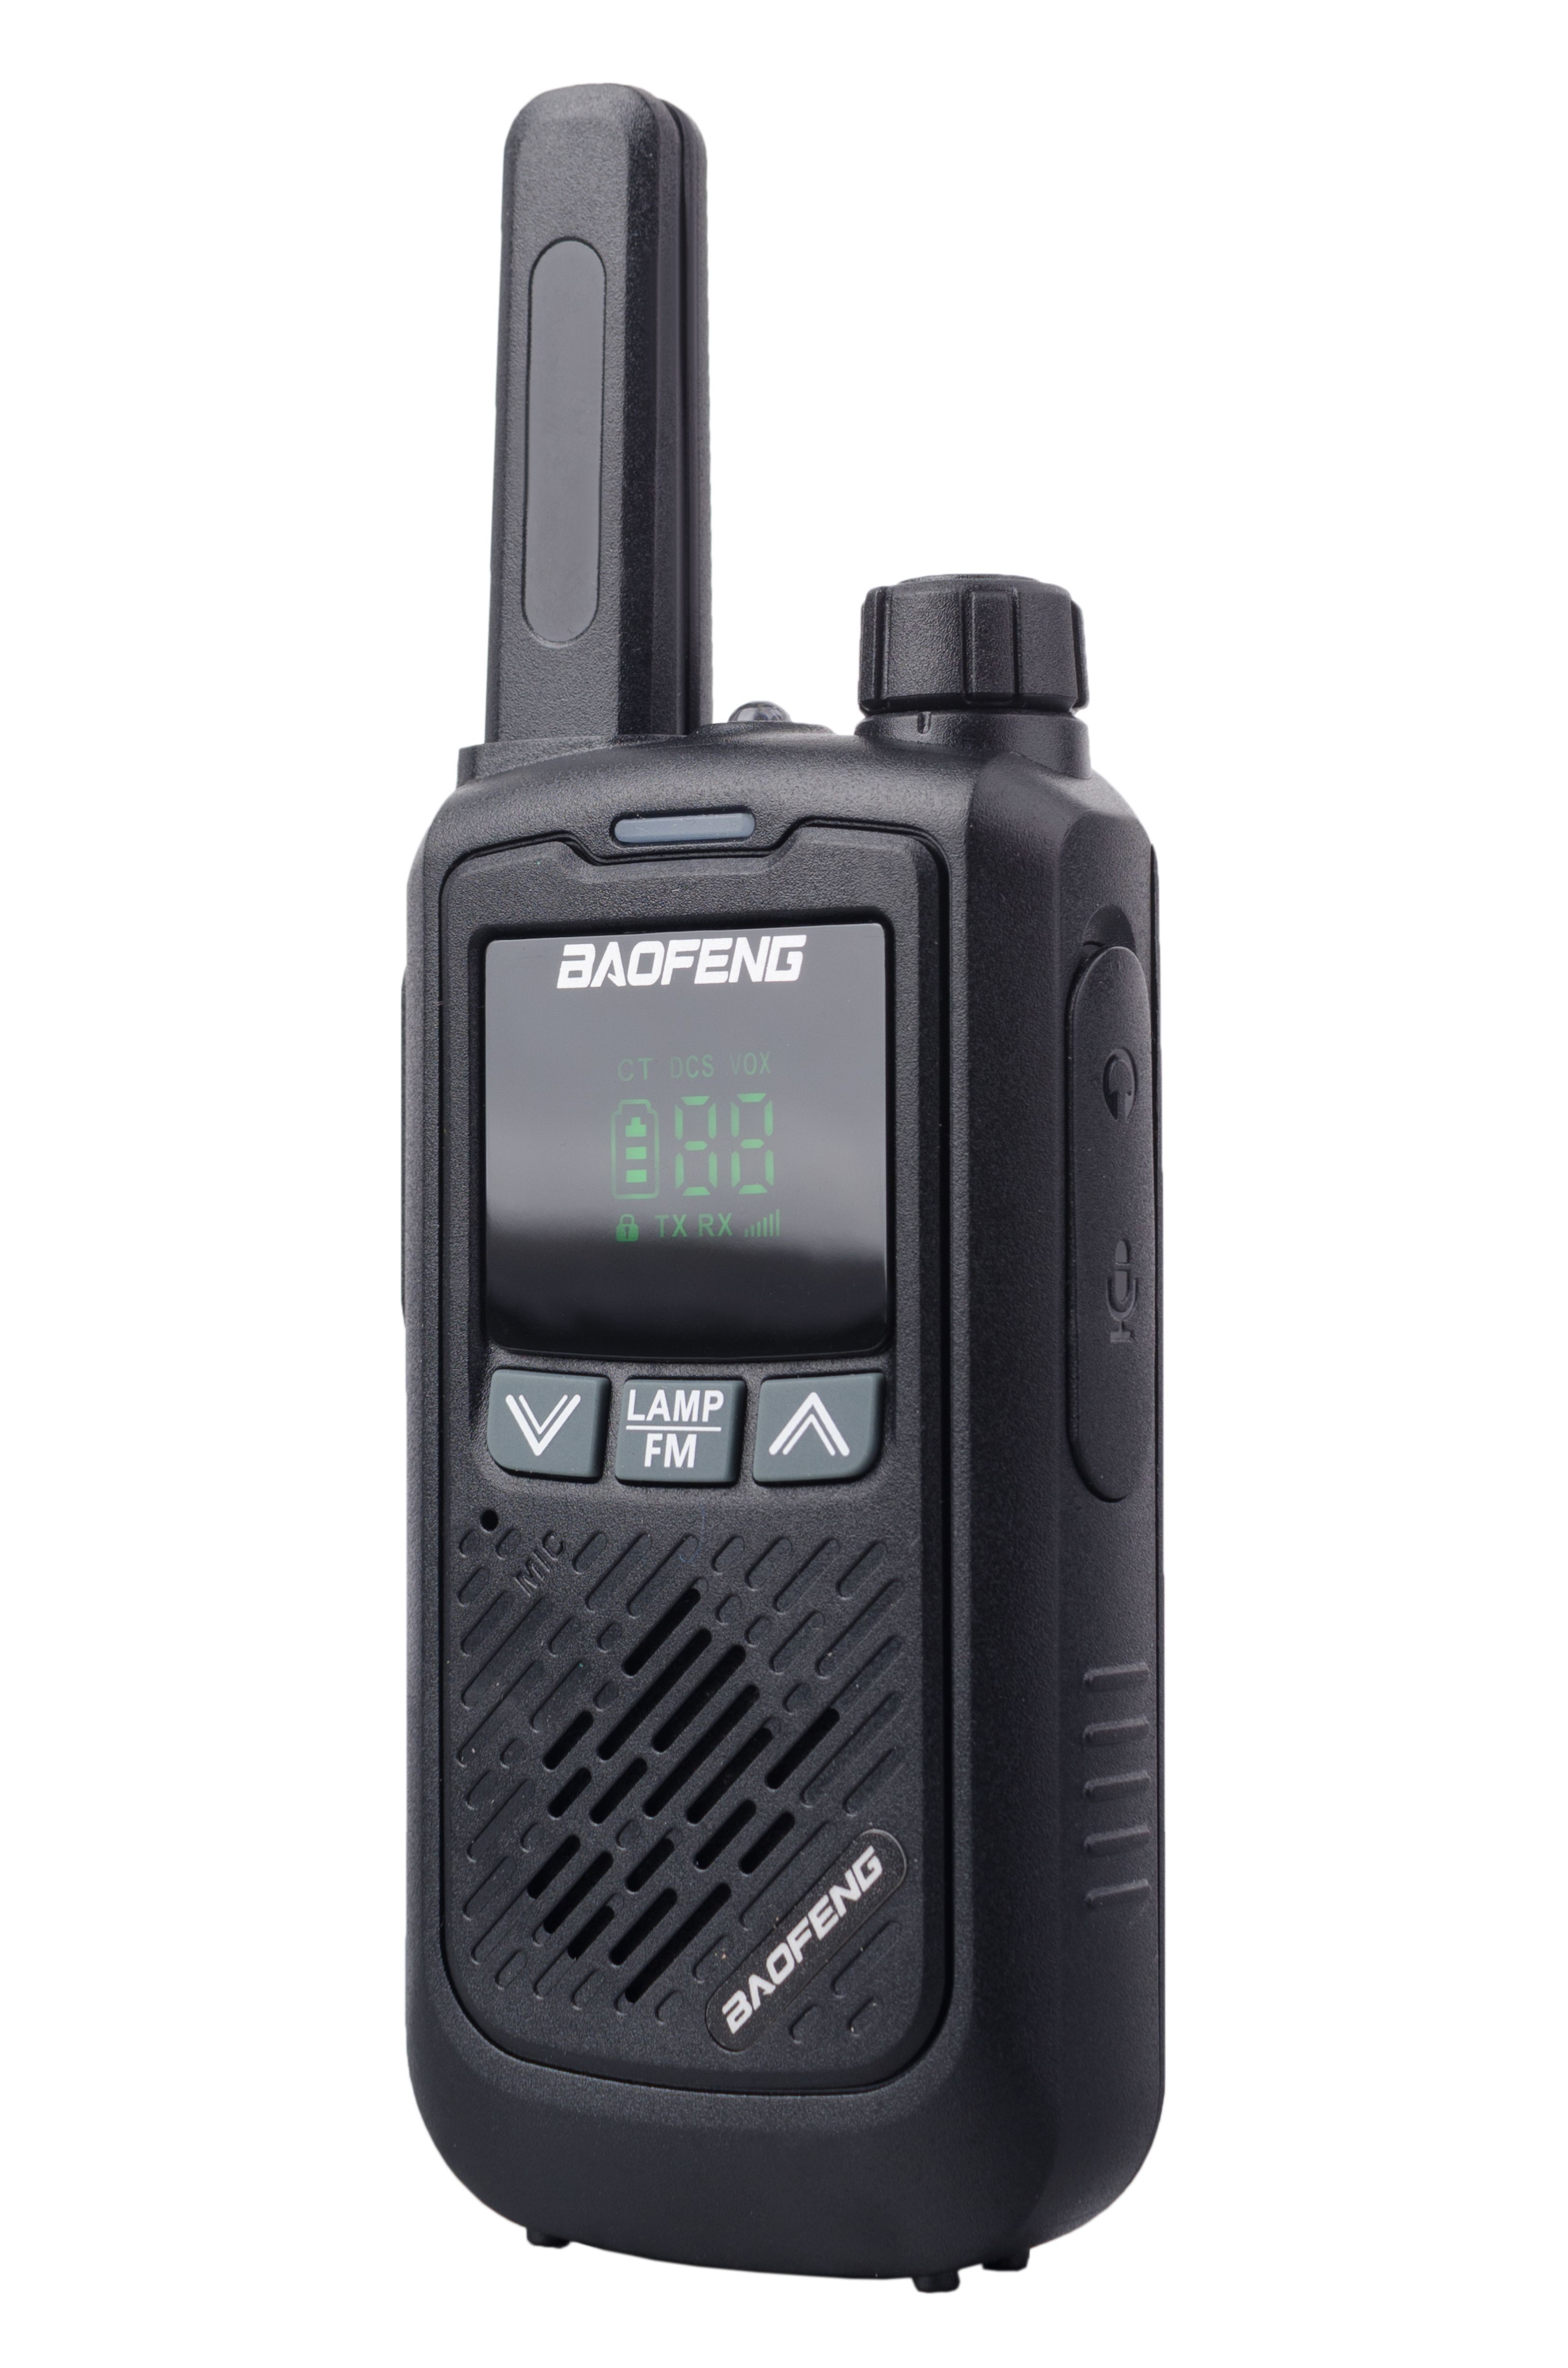 Baofeng BF-T17 PMR Portable Radio in Black